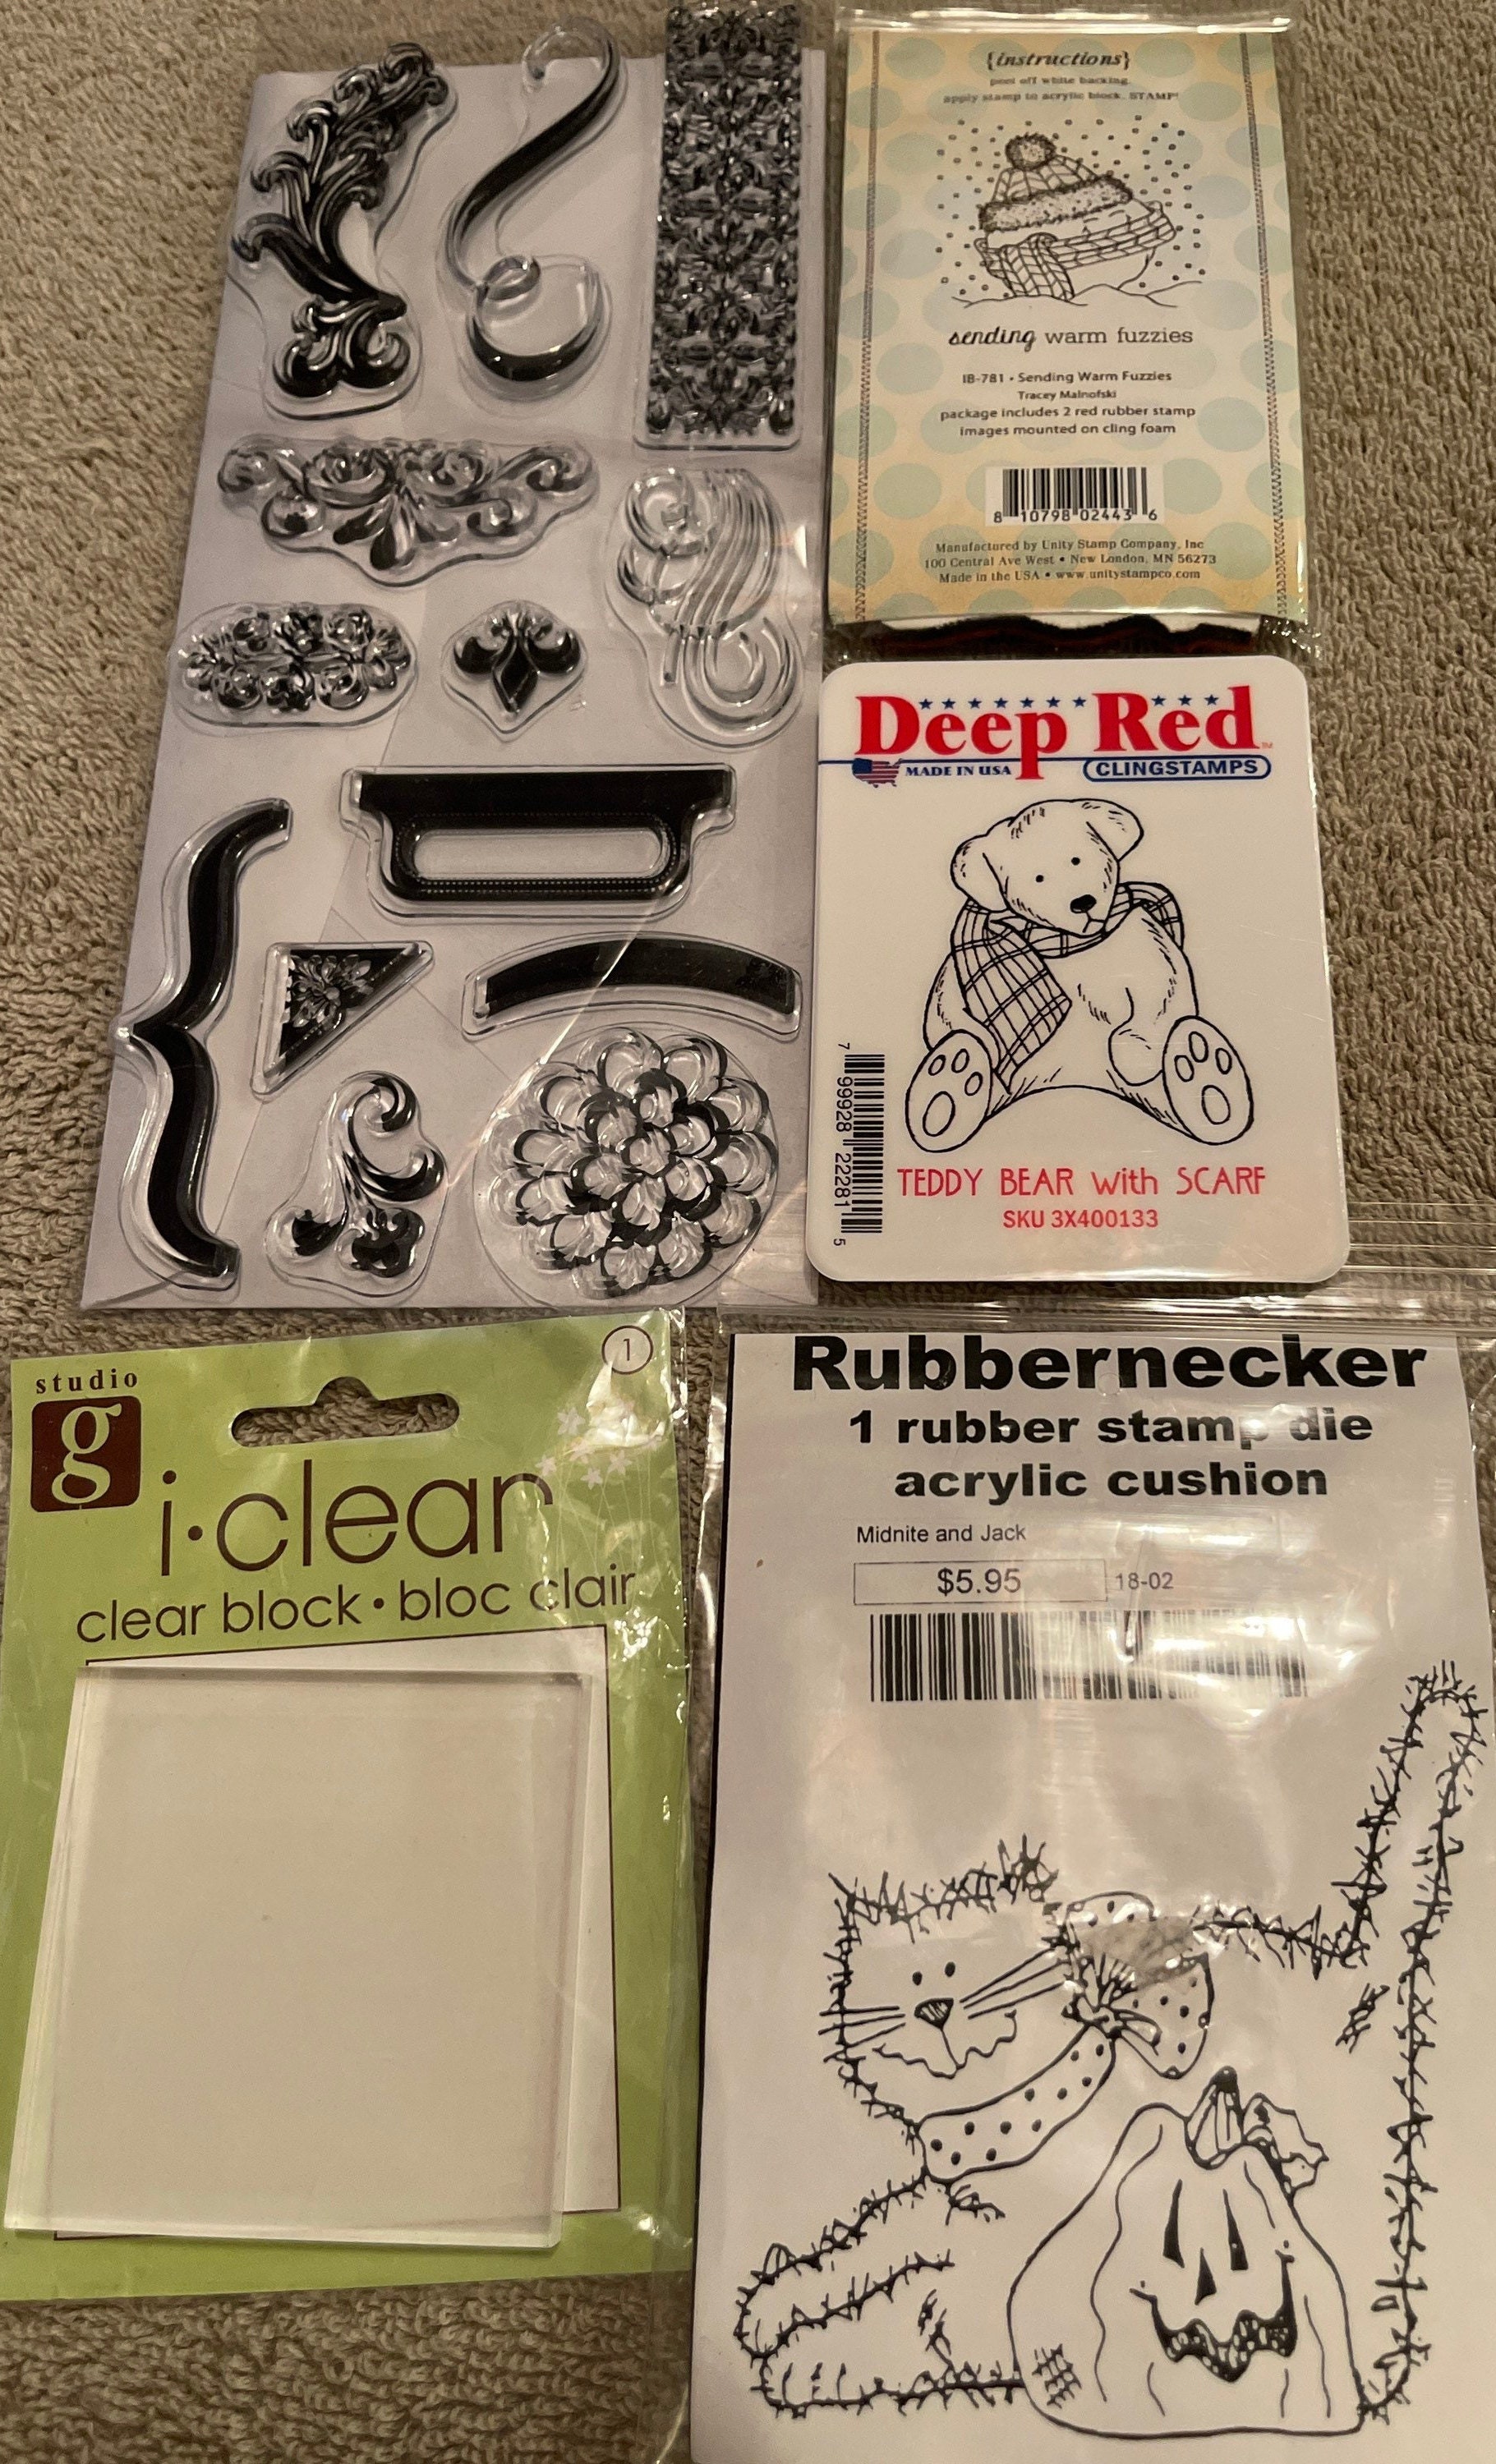 Deep Red Premium Glue Gun Sealing Wax -Pack of 6